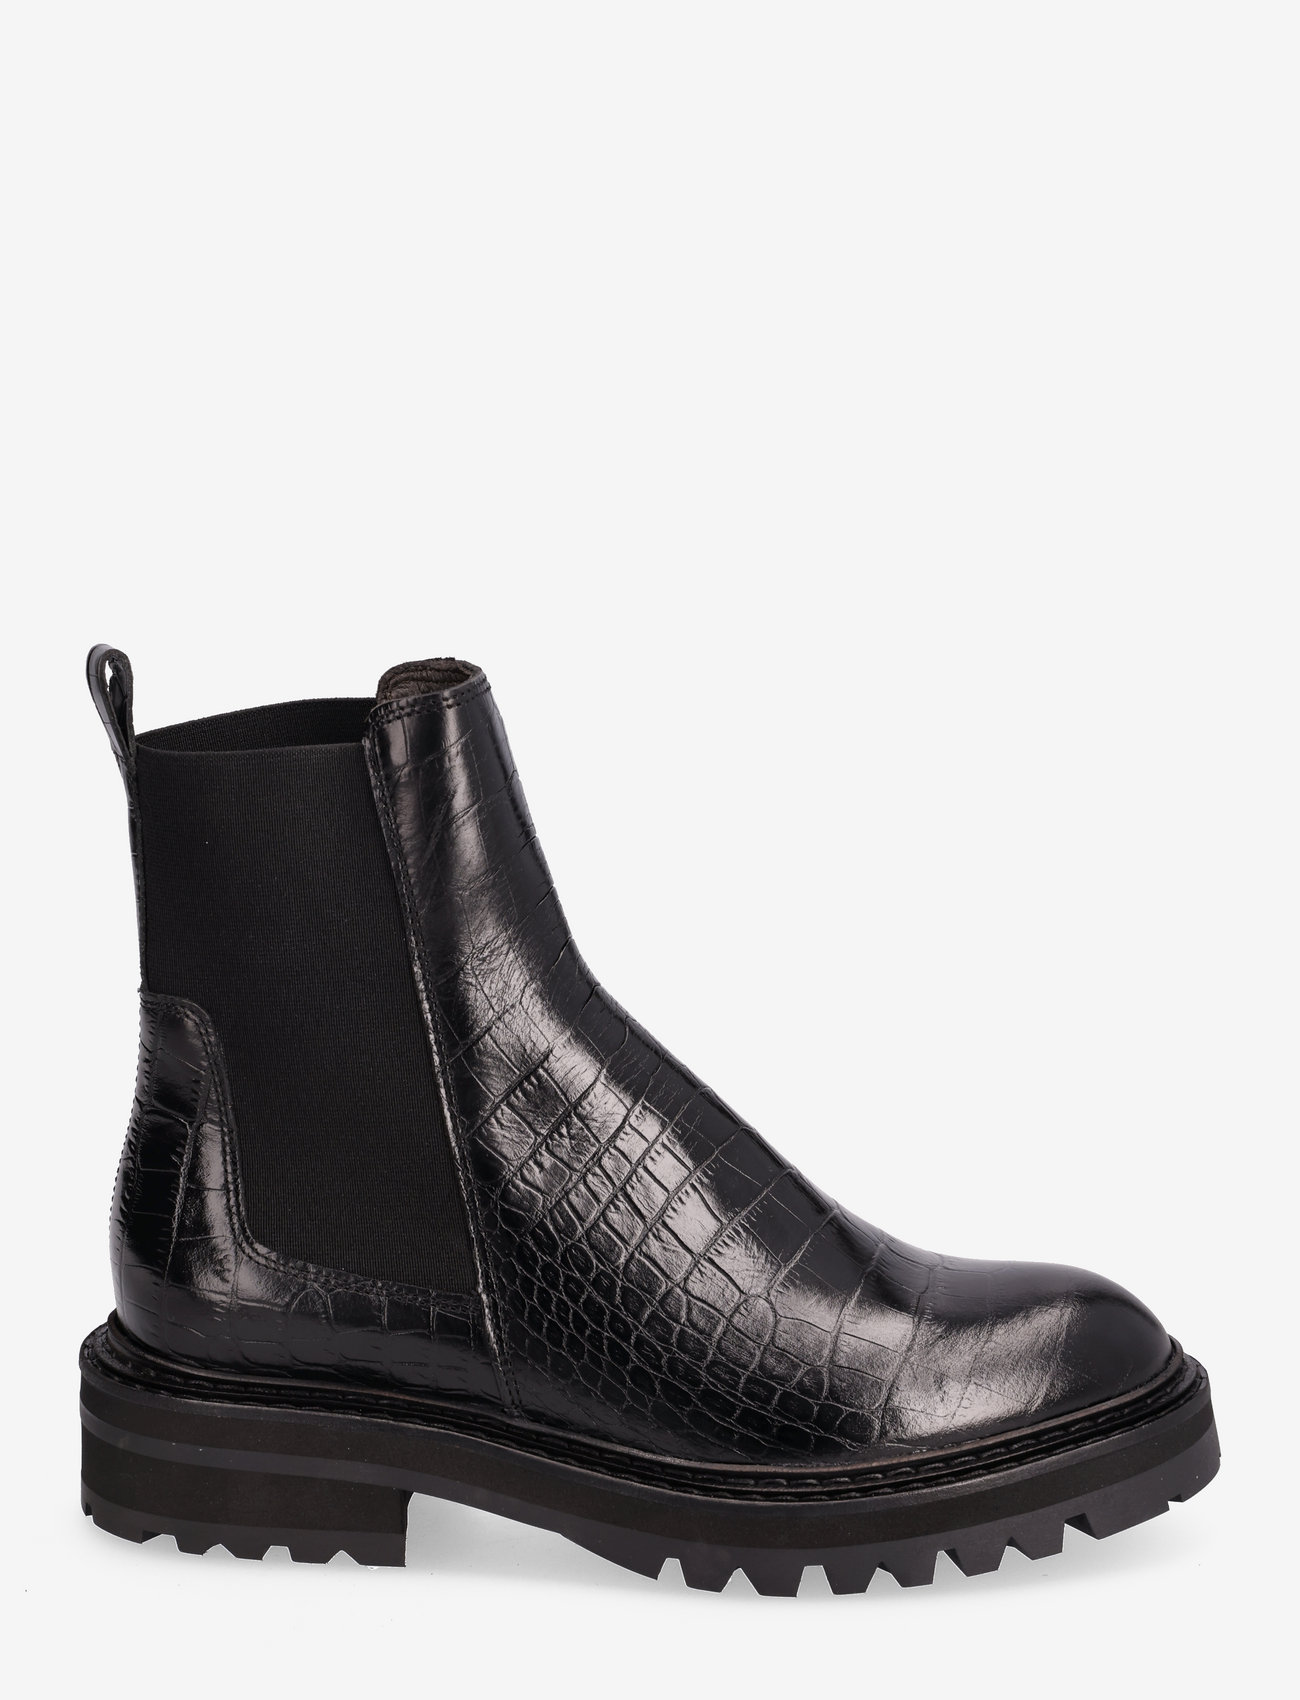 Billi Bi - Boots - chelsea boots - black croco - 1